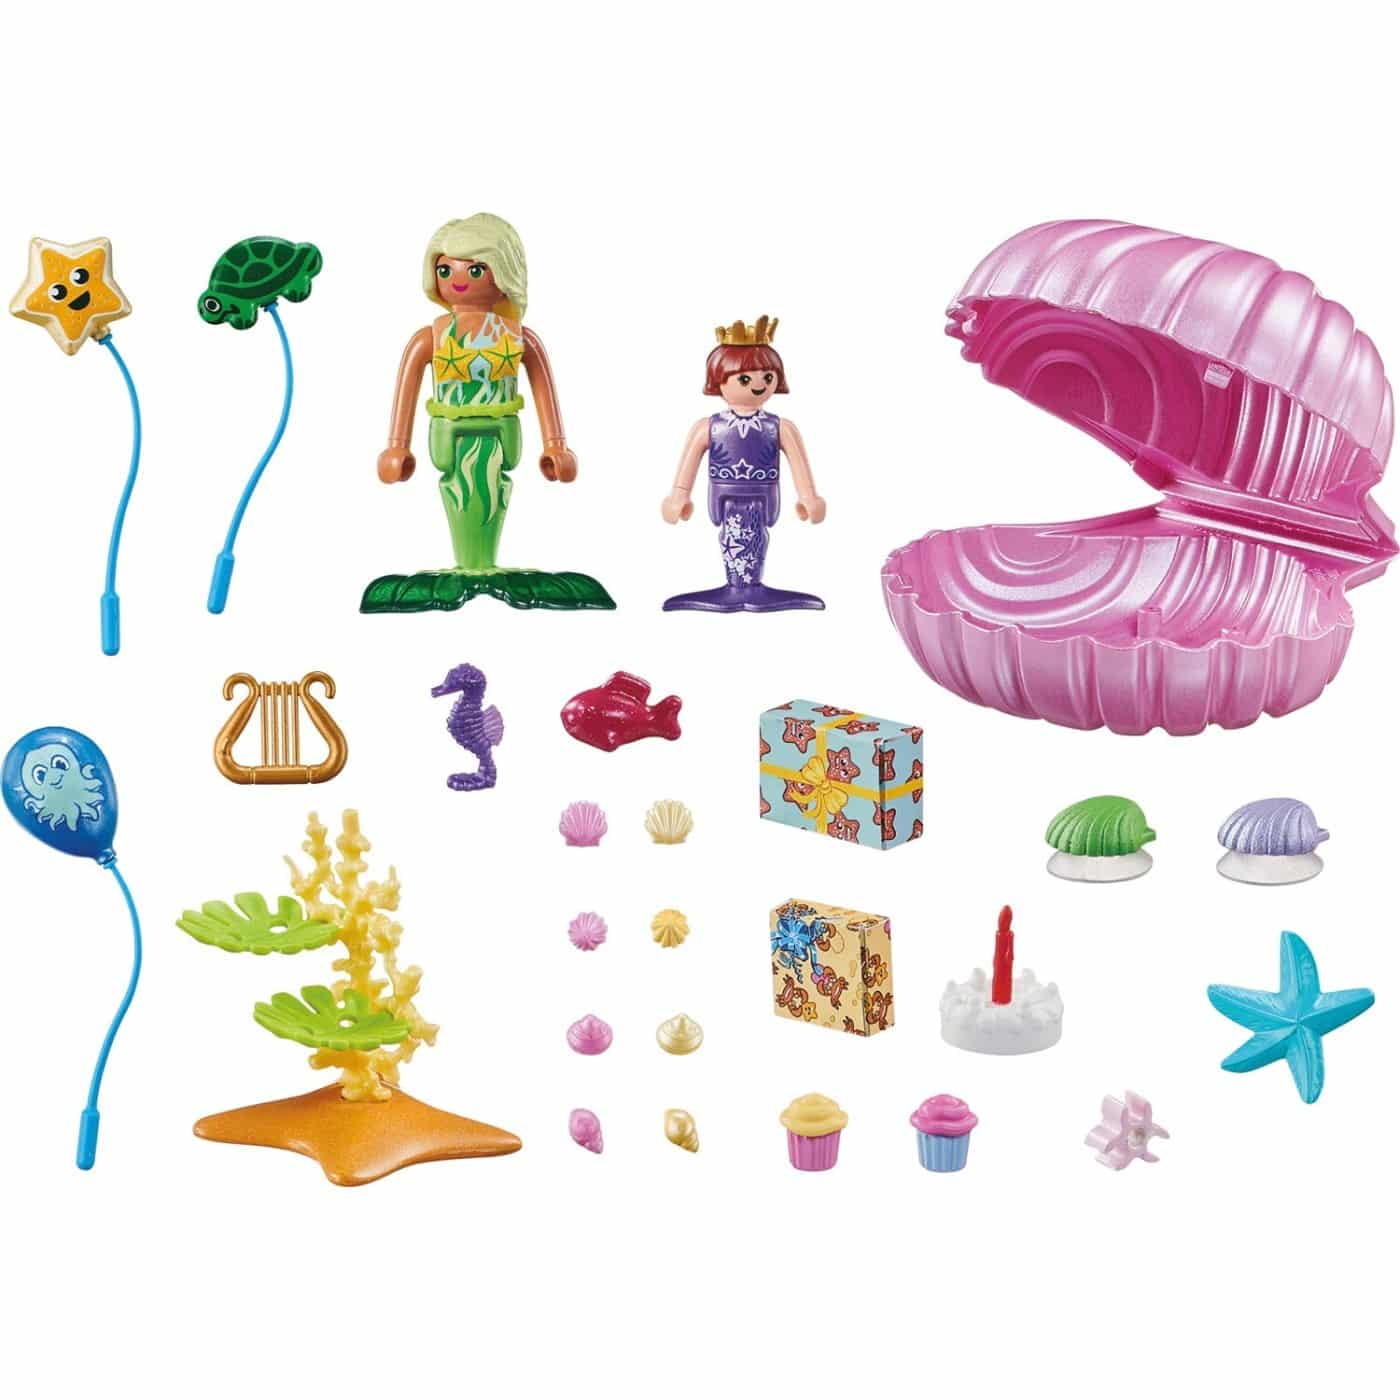 71446 Paymobil Princess Magic Gift Set Παρτυ Γενεθλιων Με Γοργονες